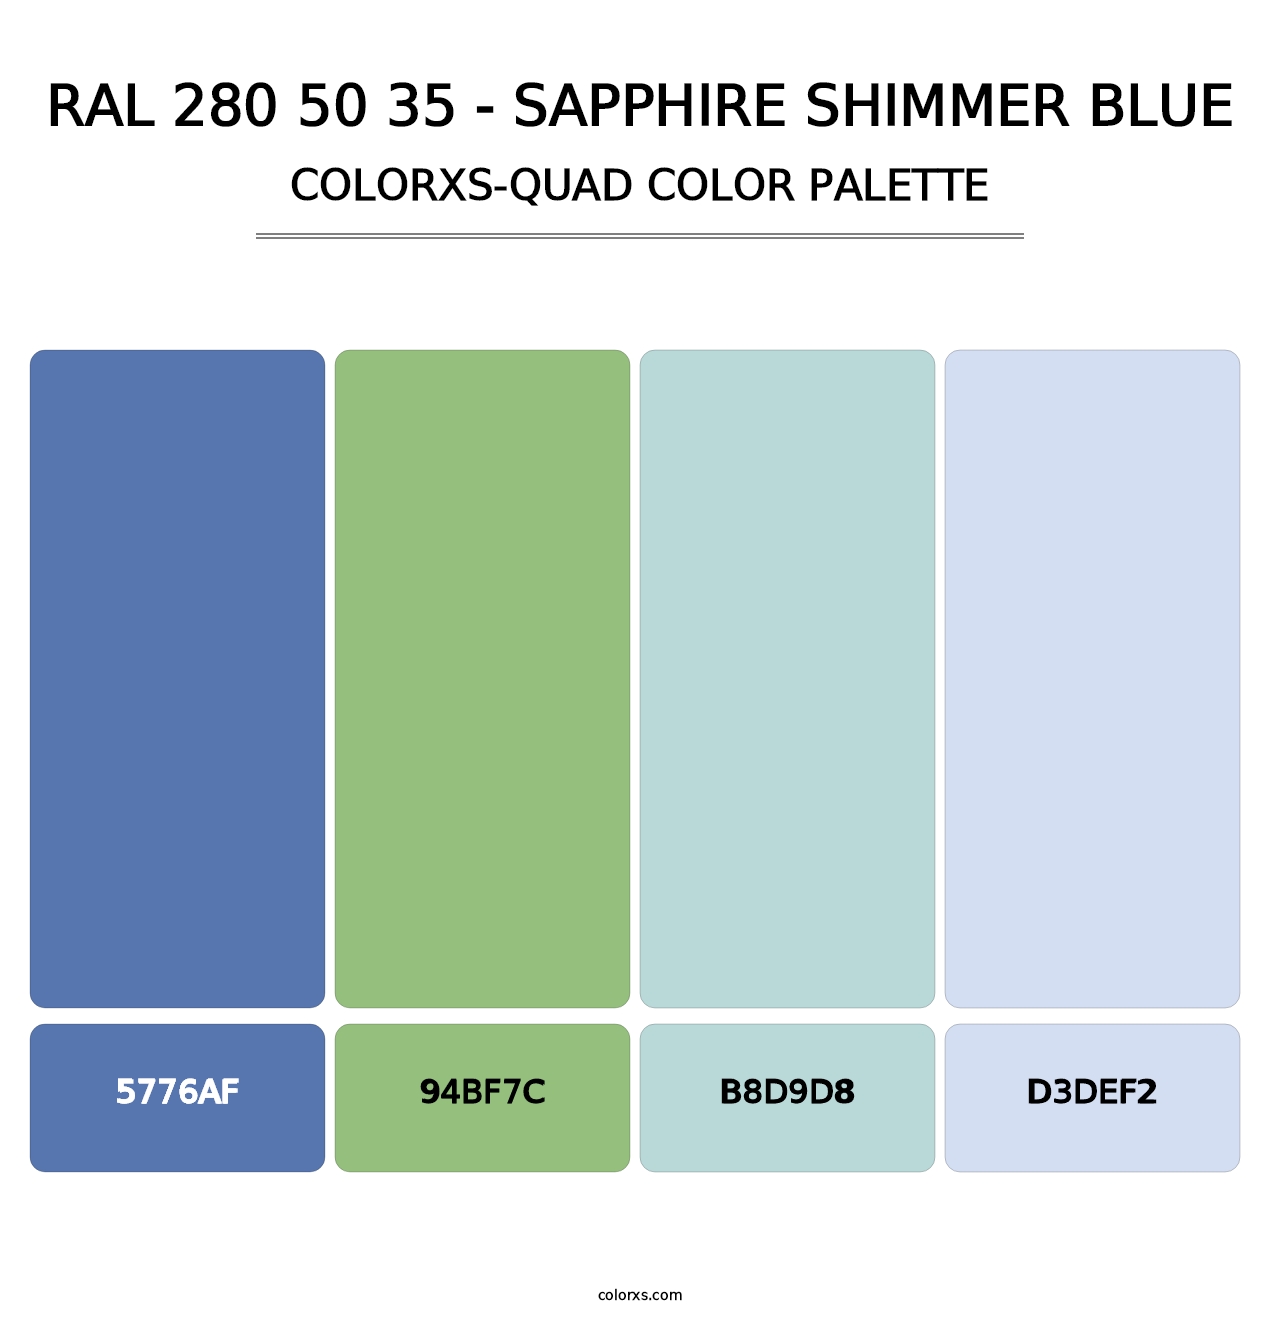 RAL 280 50 35 - Sapphire Shimmer Blue - Colorxs Quad Palette